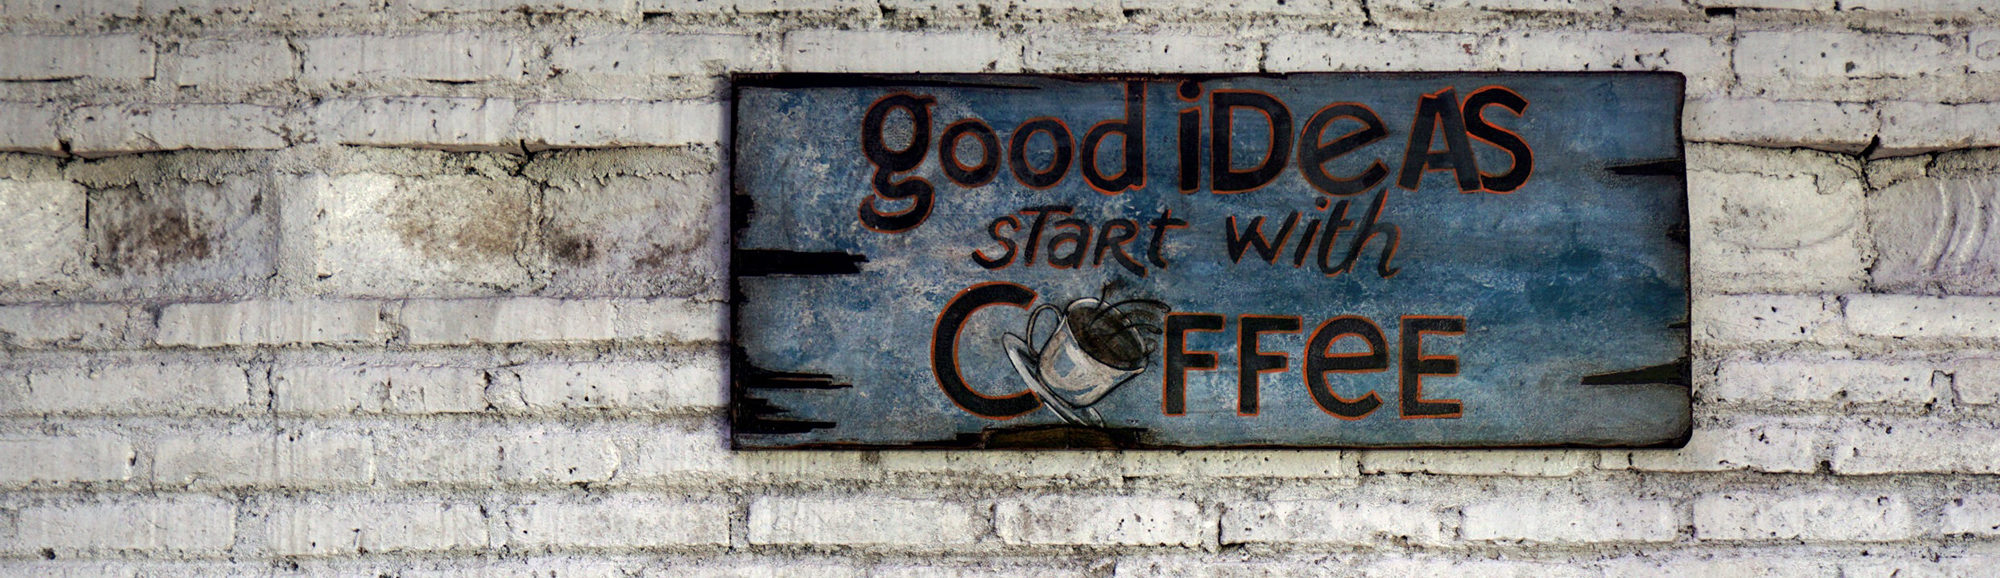 coffee-good ideas